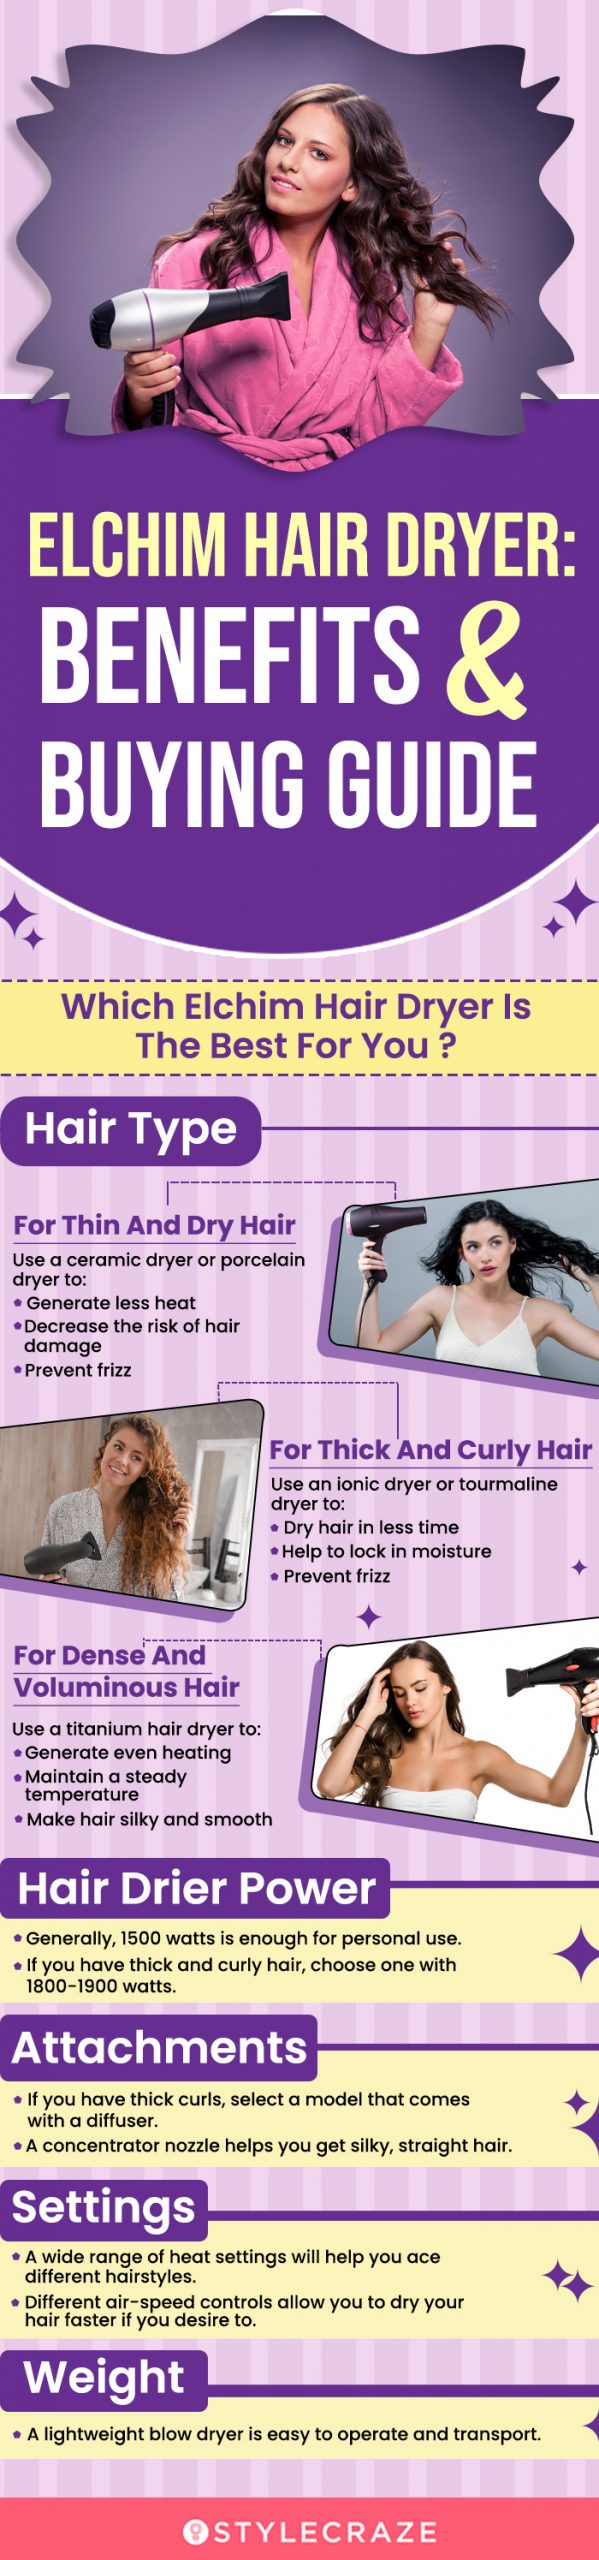 Elchim Hair Dryer: Benefits & Buying Guide (infographic)